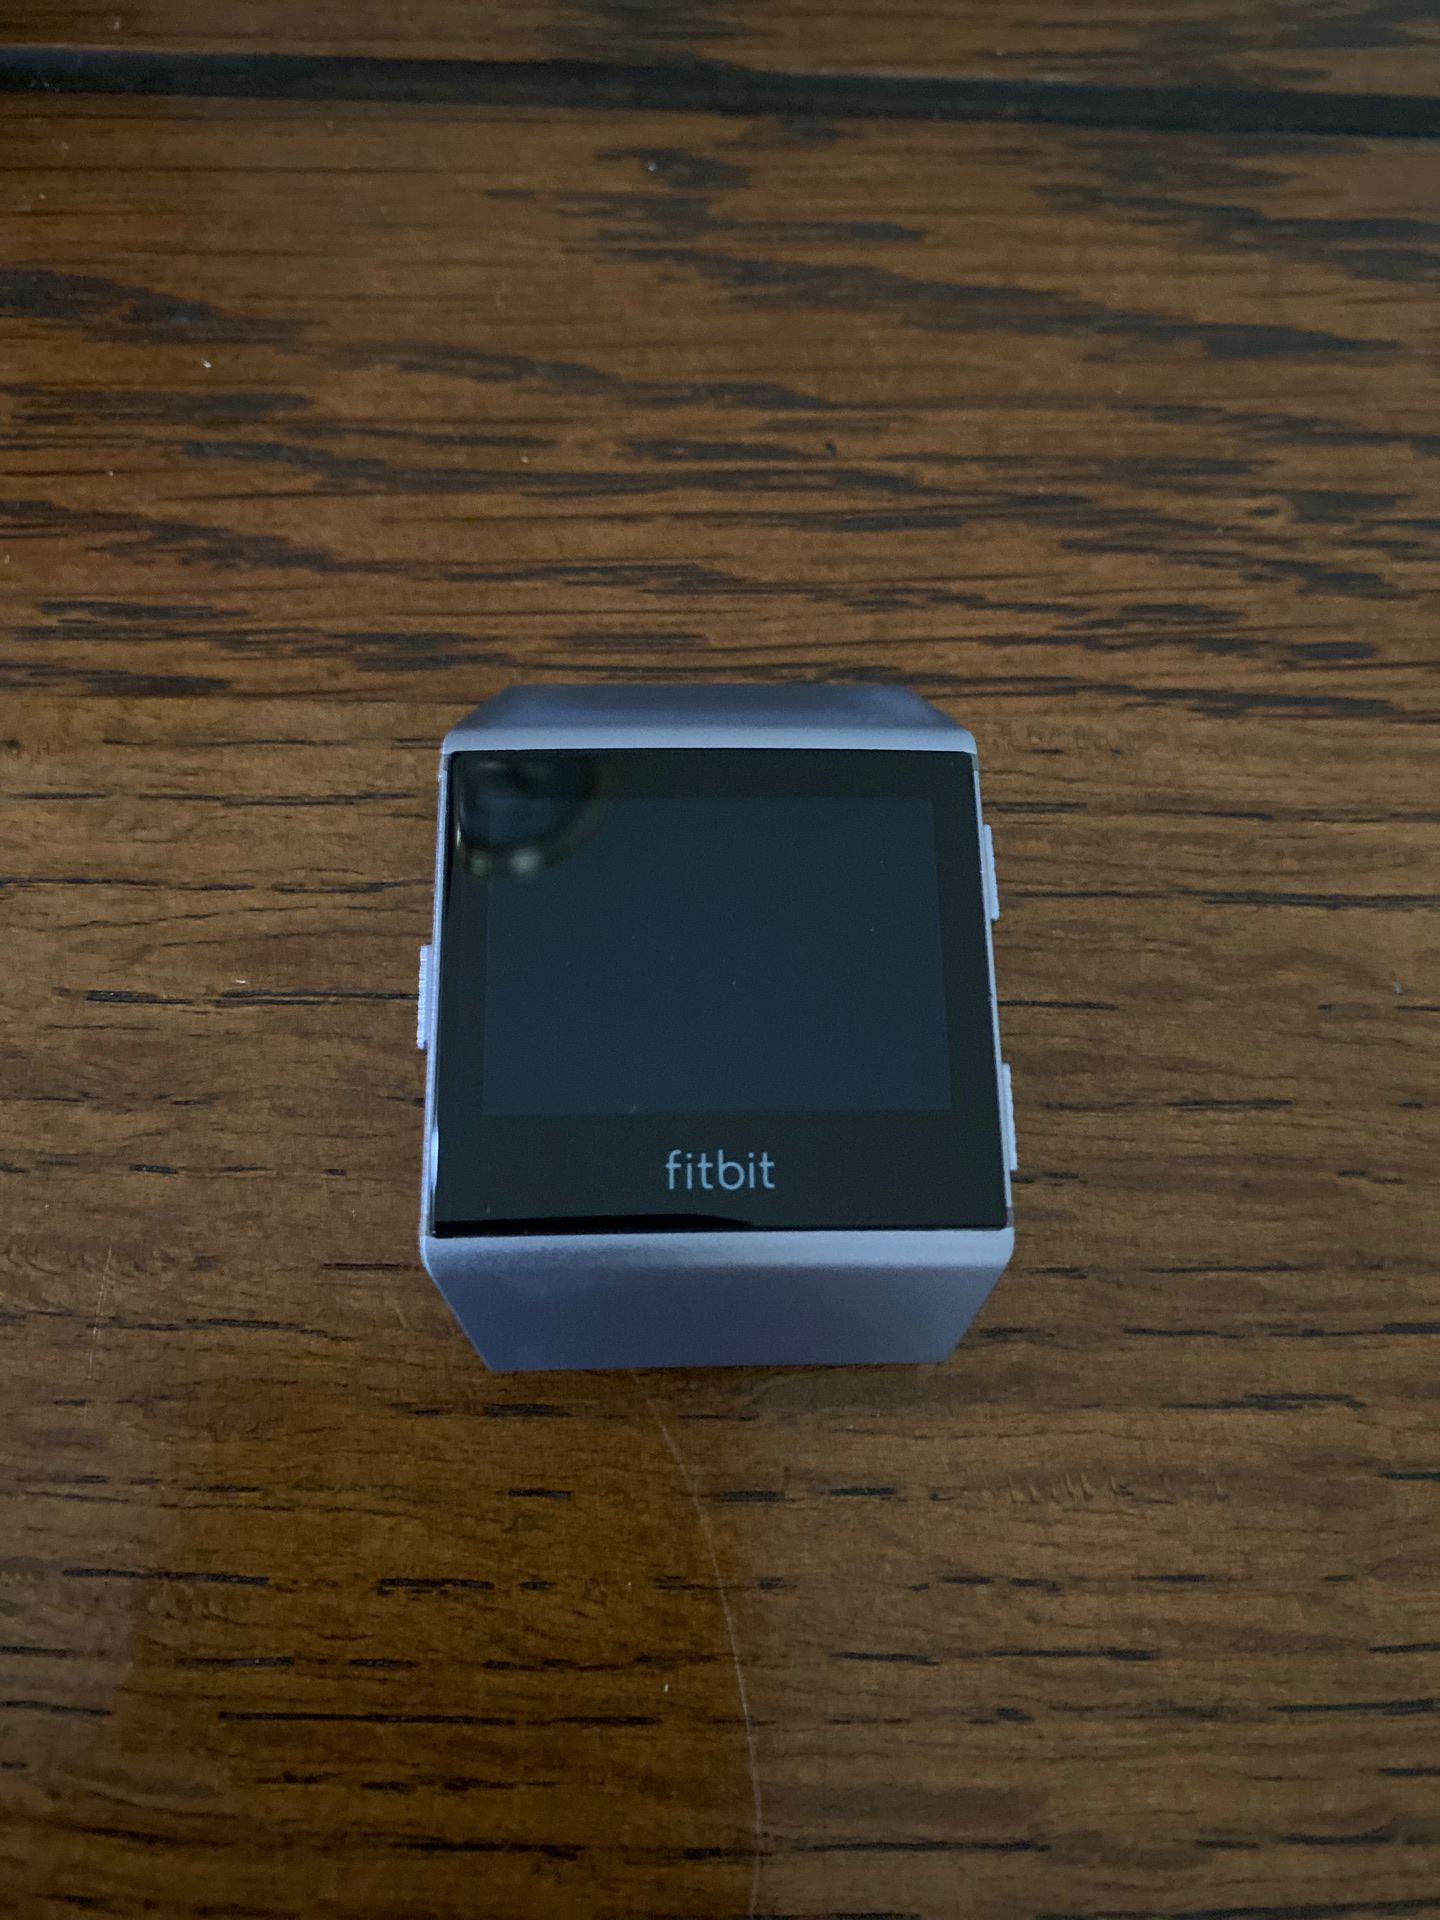 Fitbit ionic